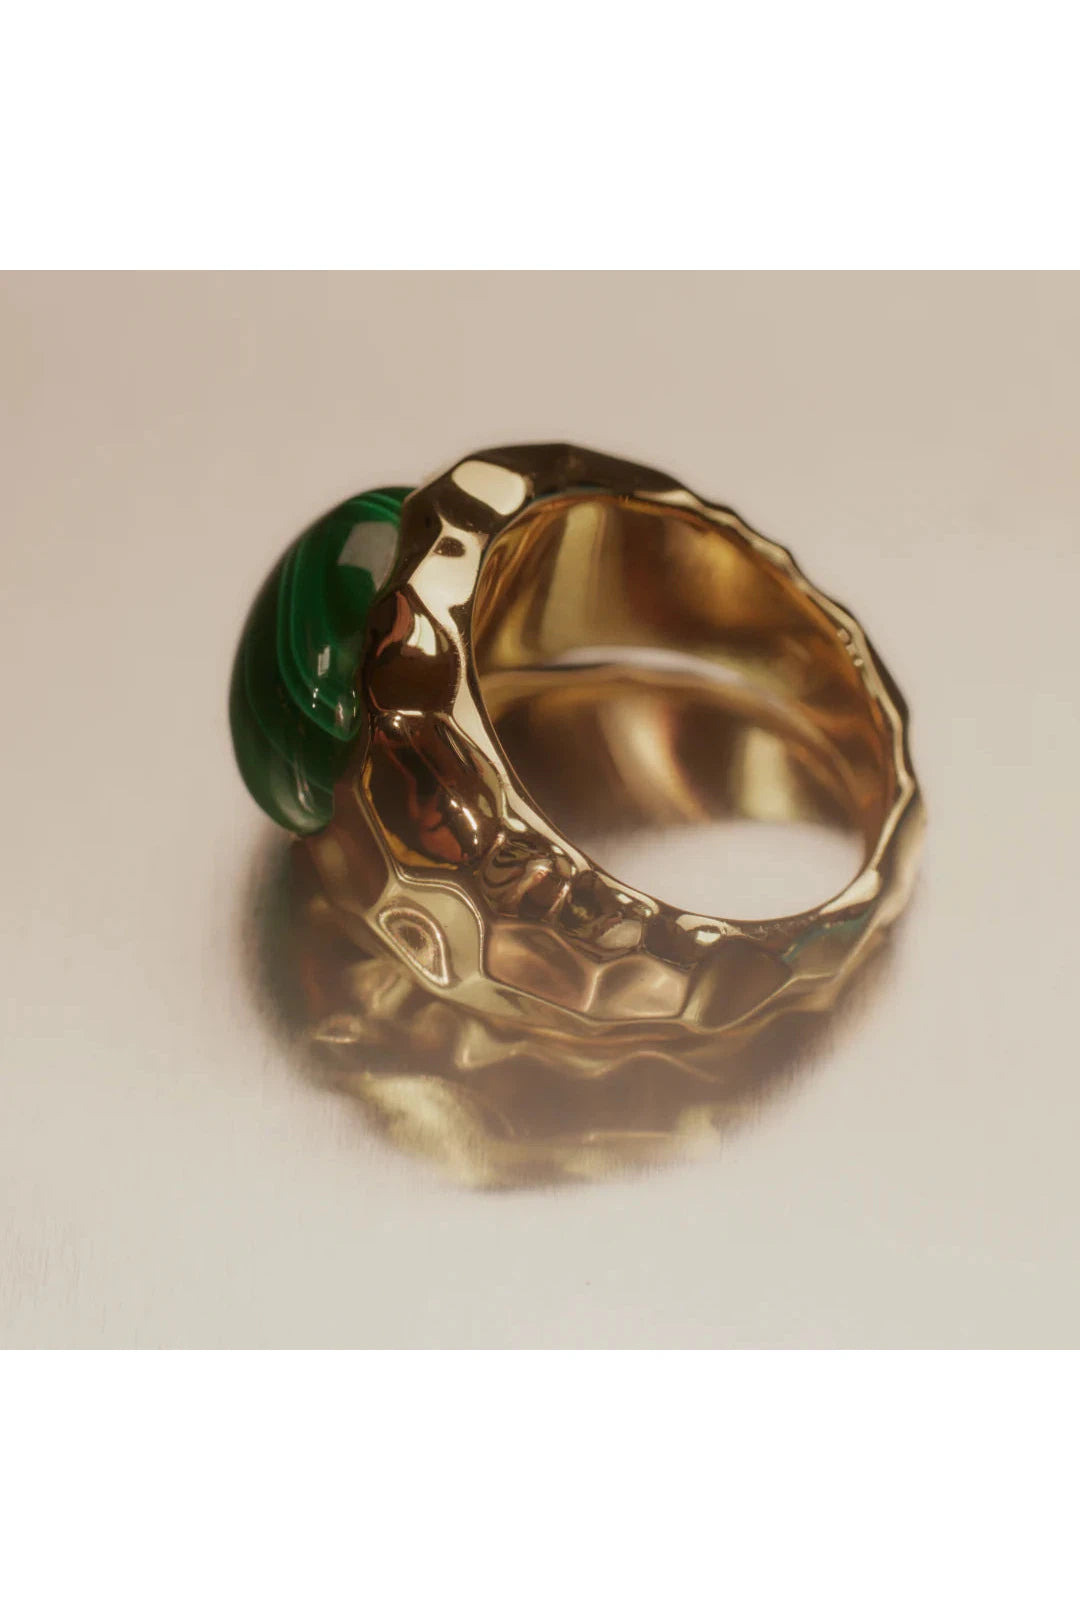 Hammered signet ring, malachite